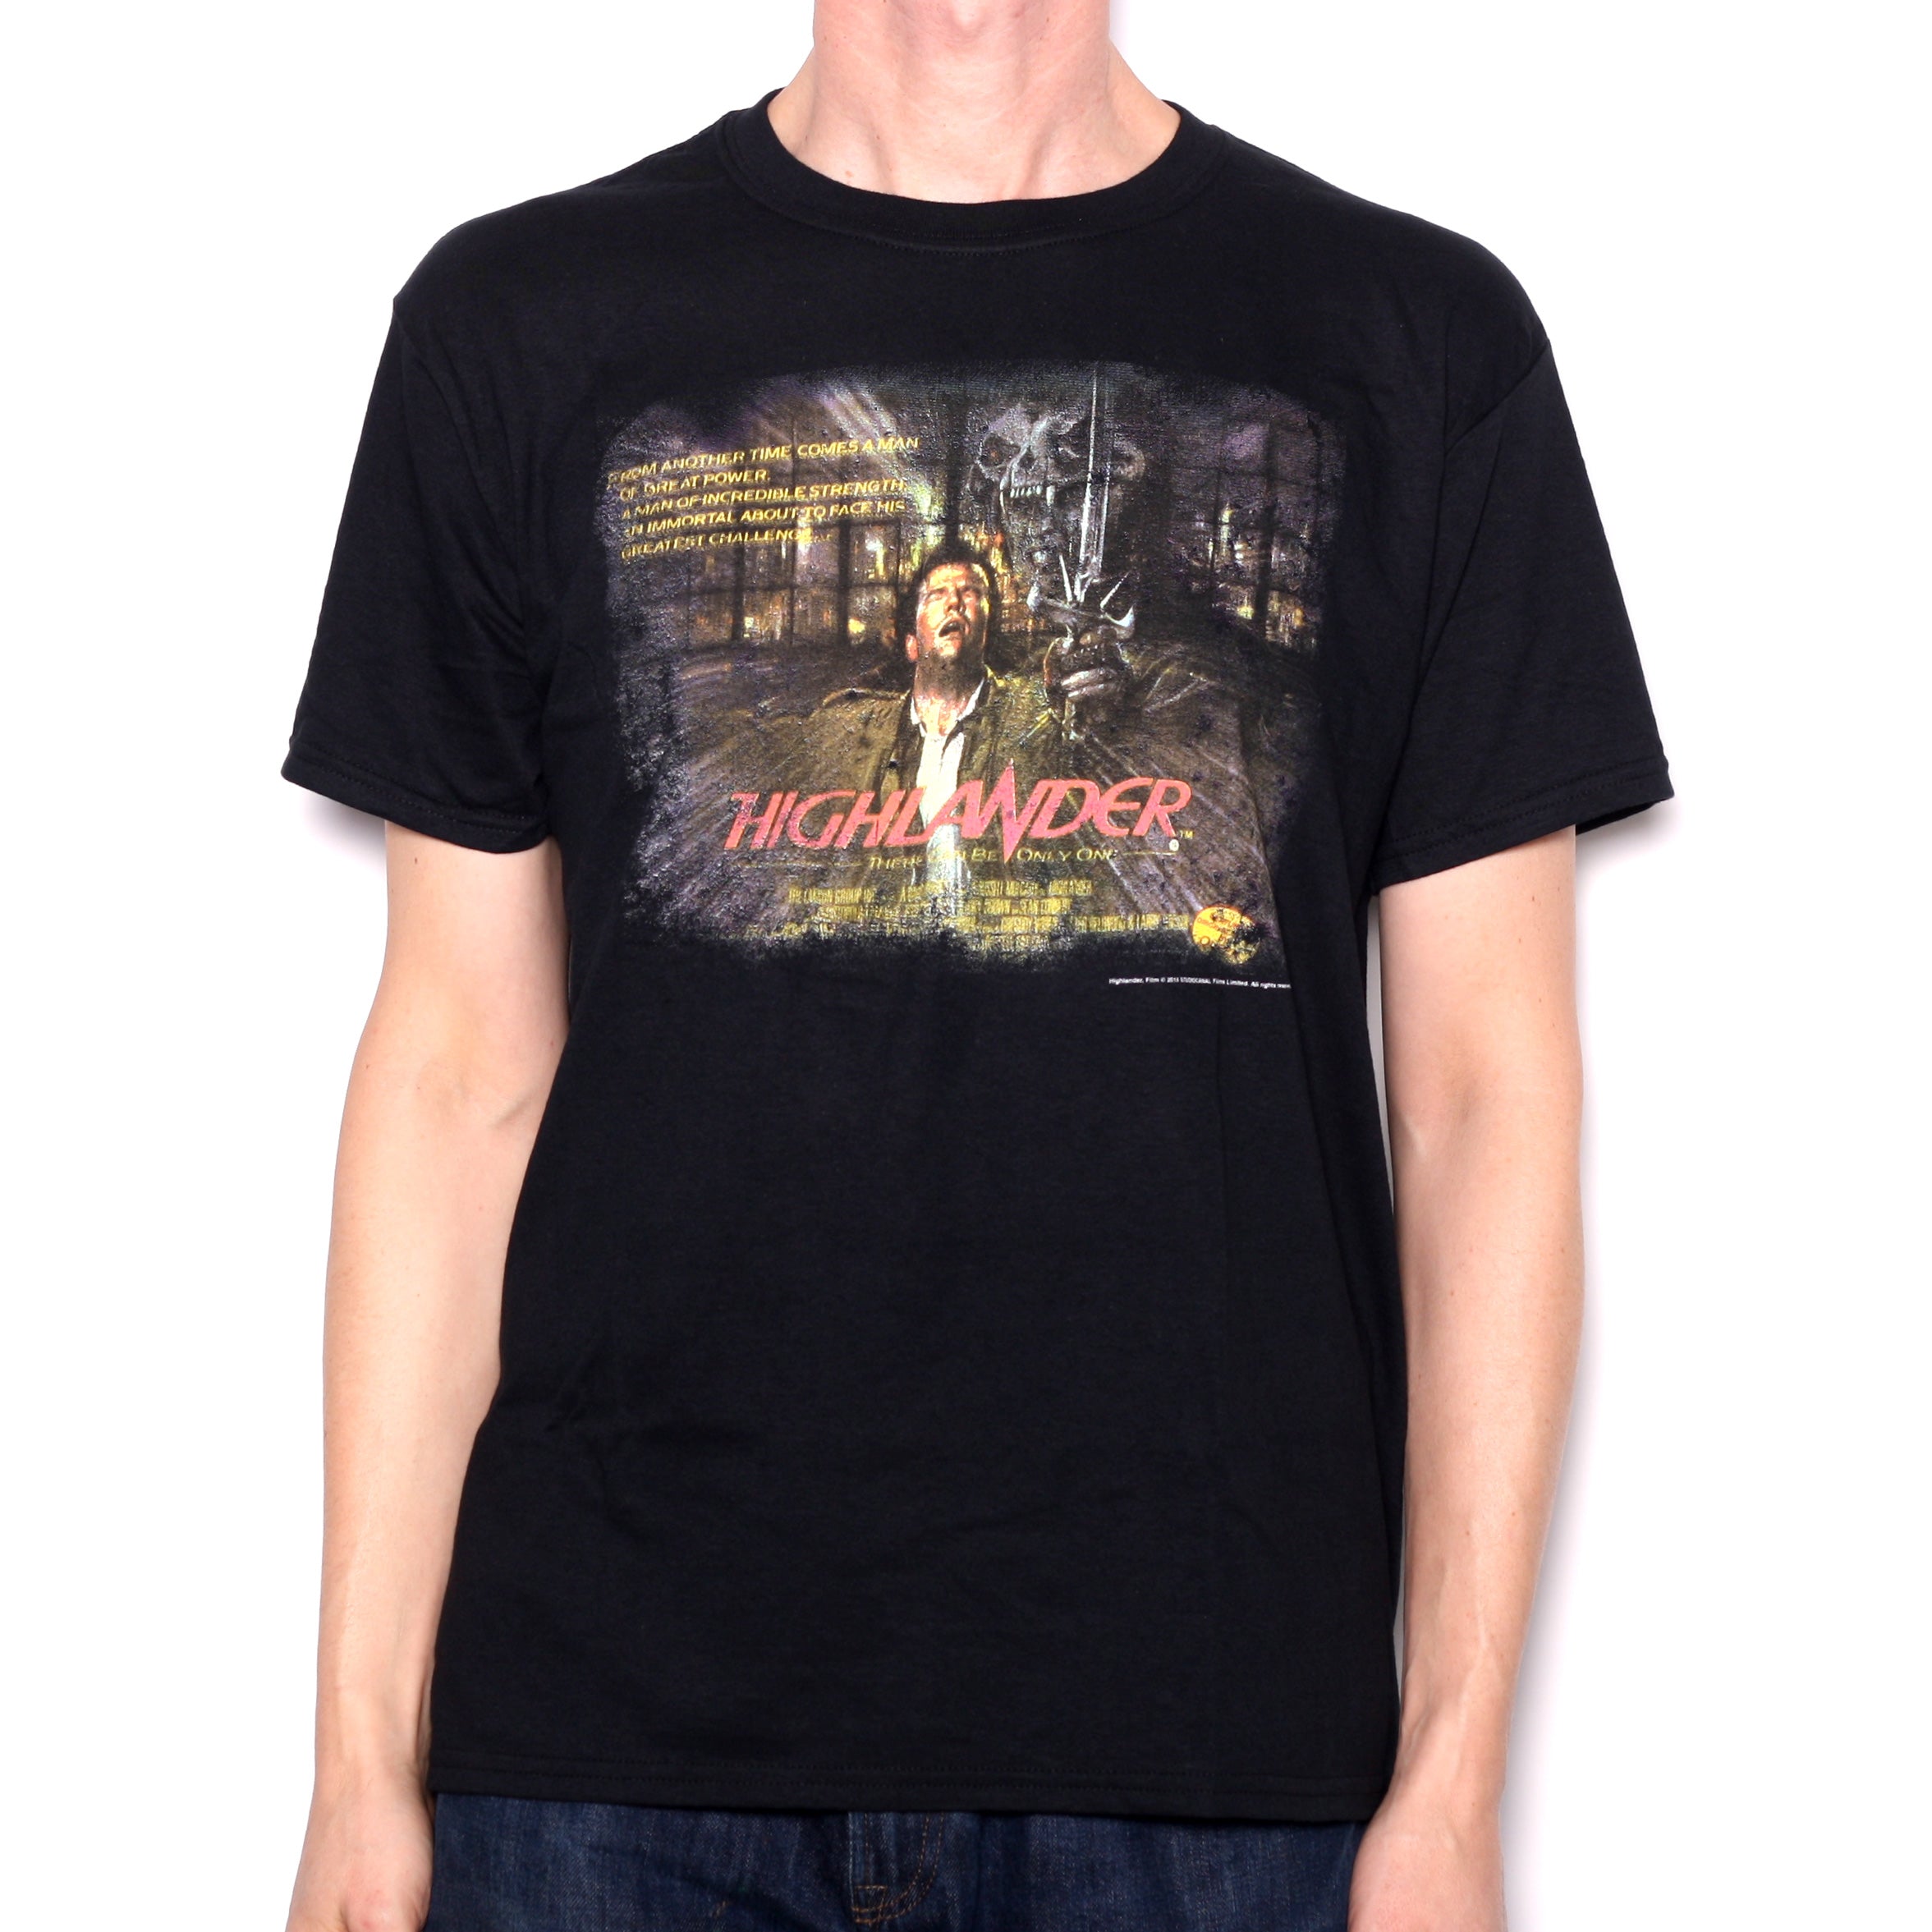 Highlander T Shirt - Cult Movie Poster 100% Official